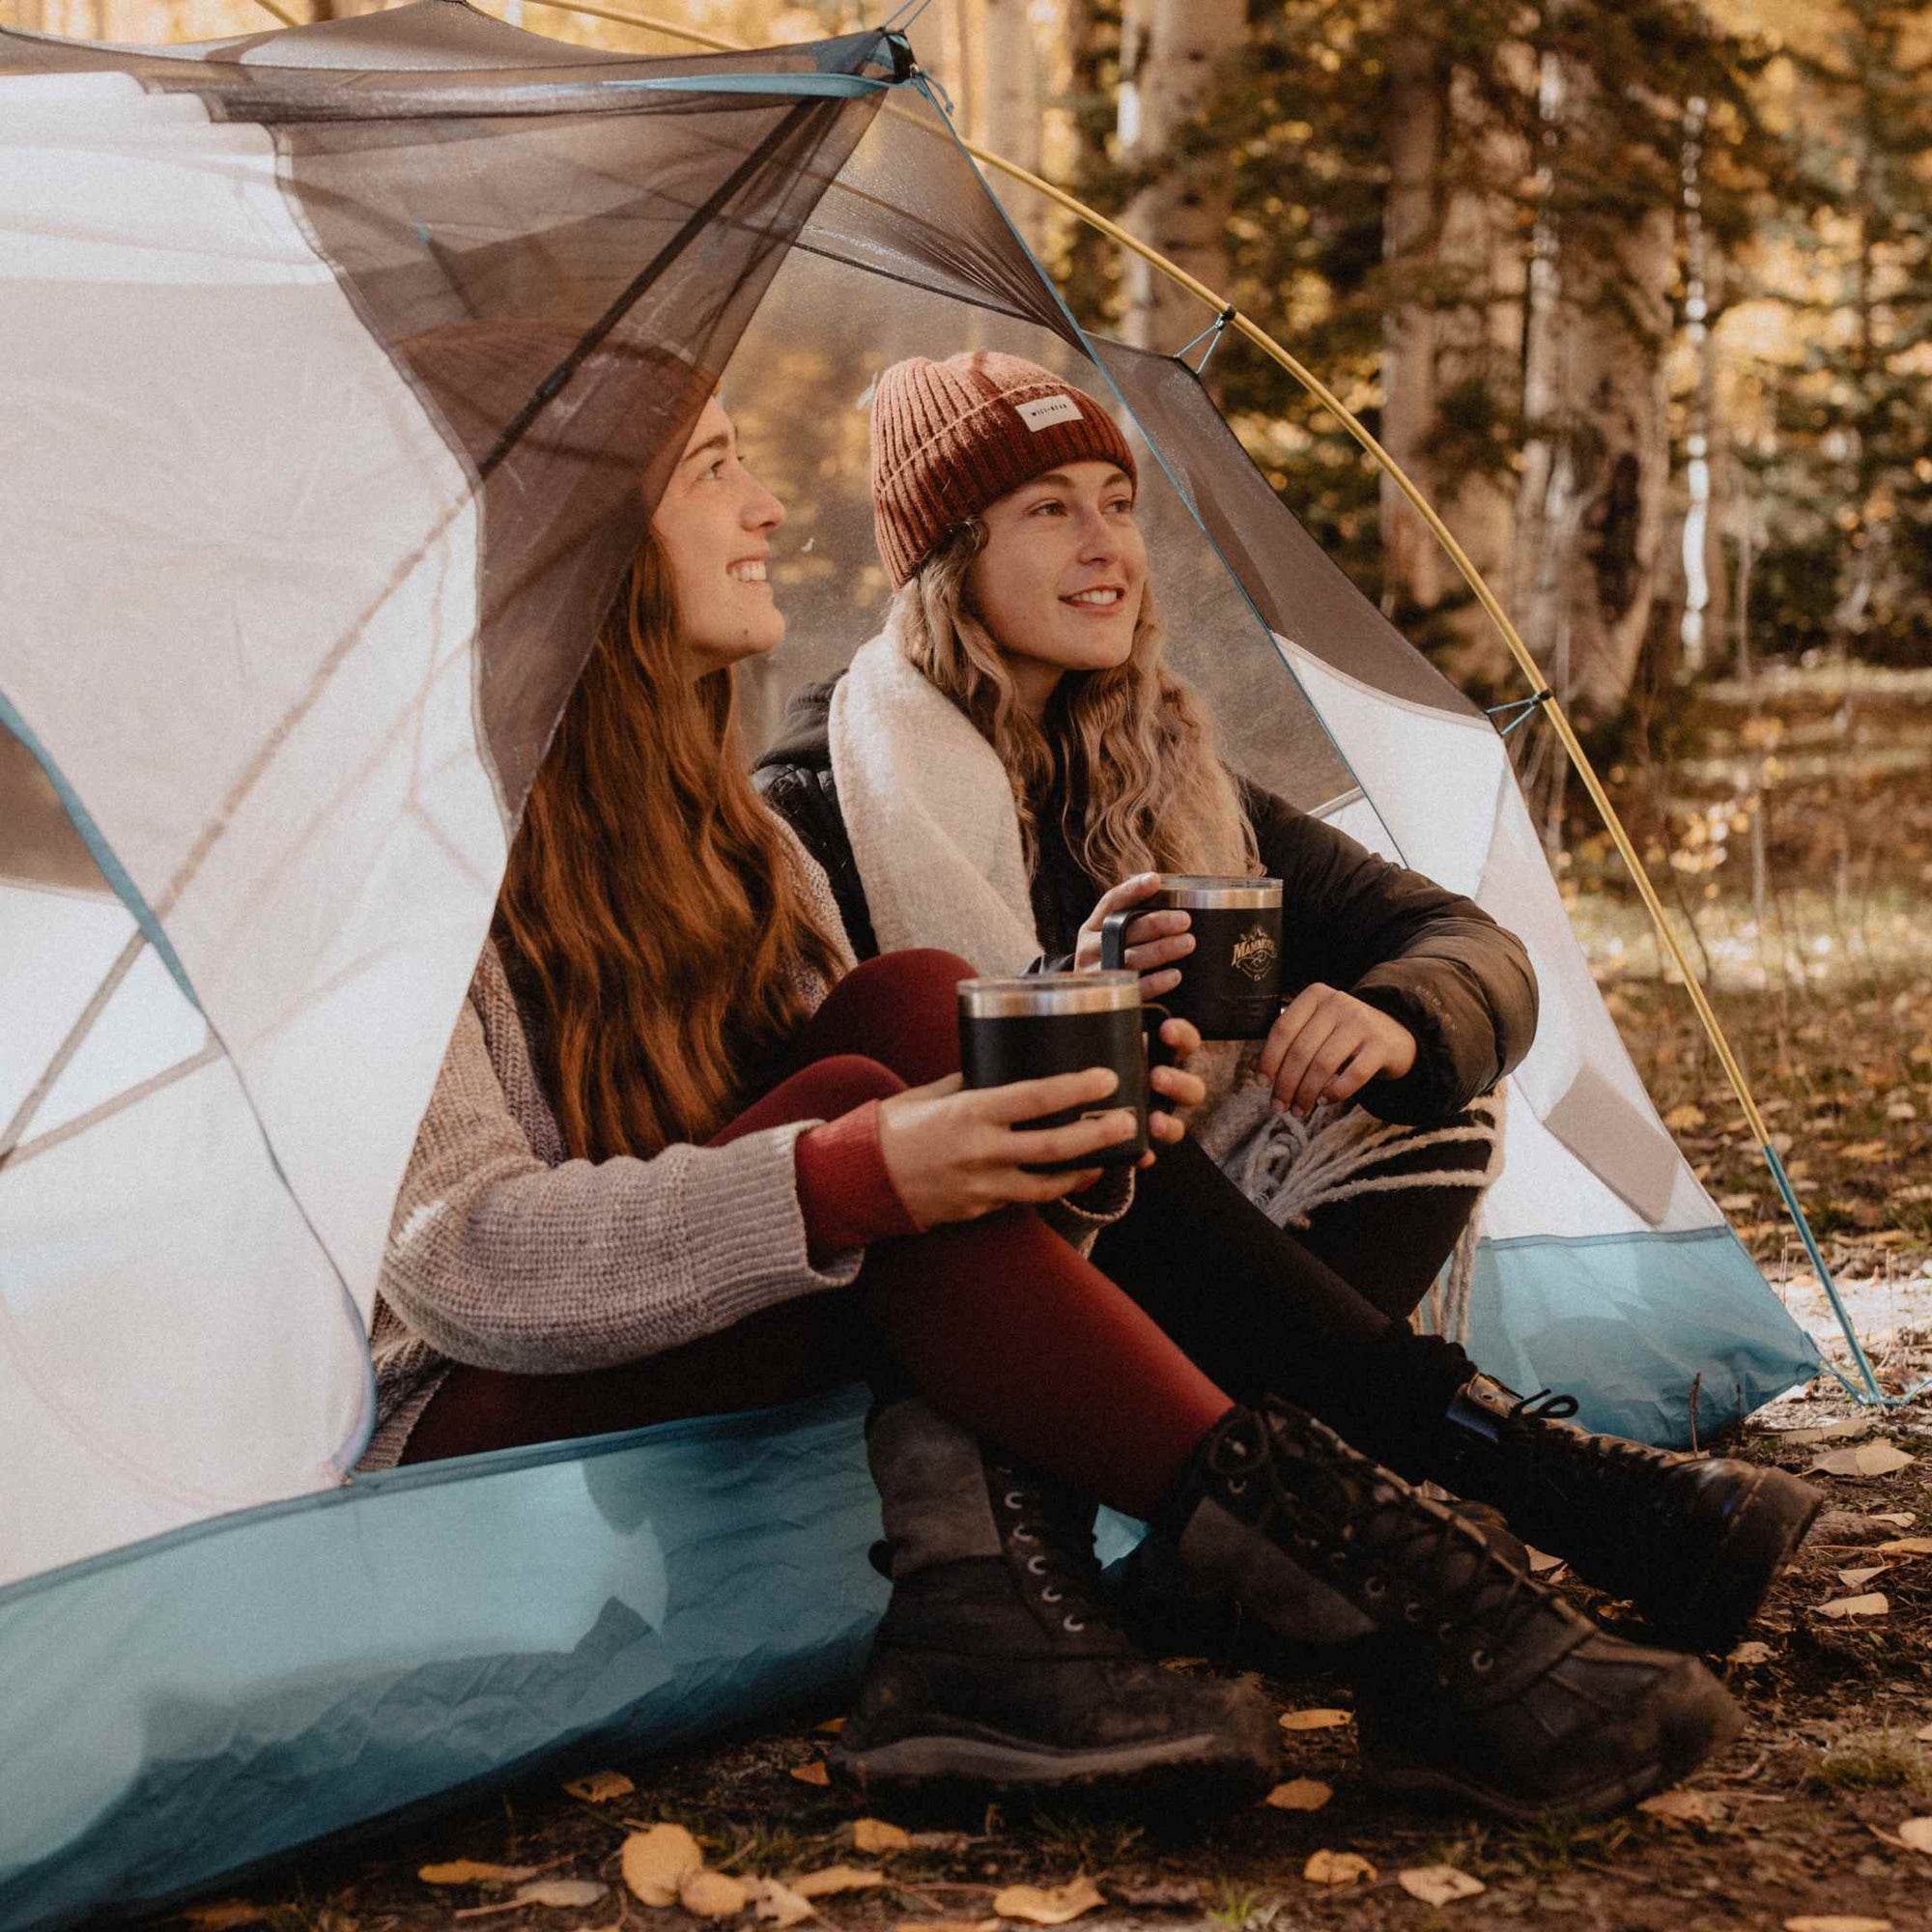 Two women wearing beanies sitting inside a tent drinking hot coffee